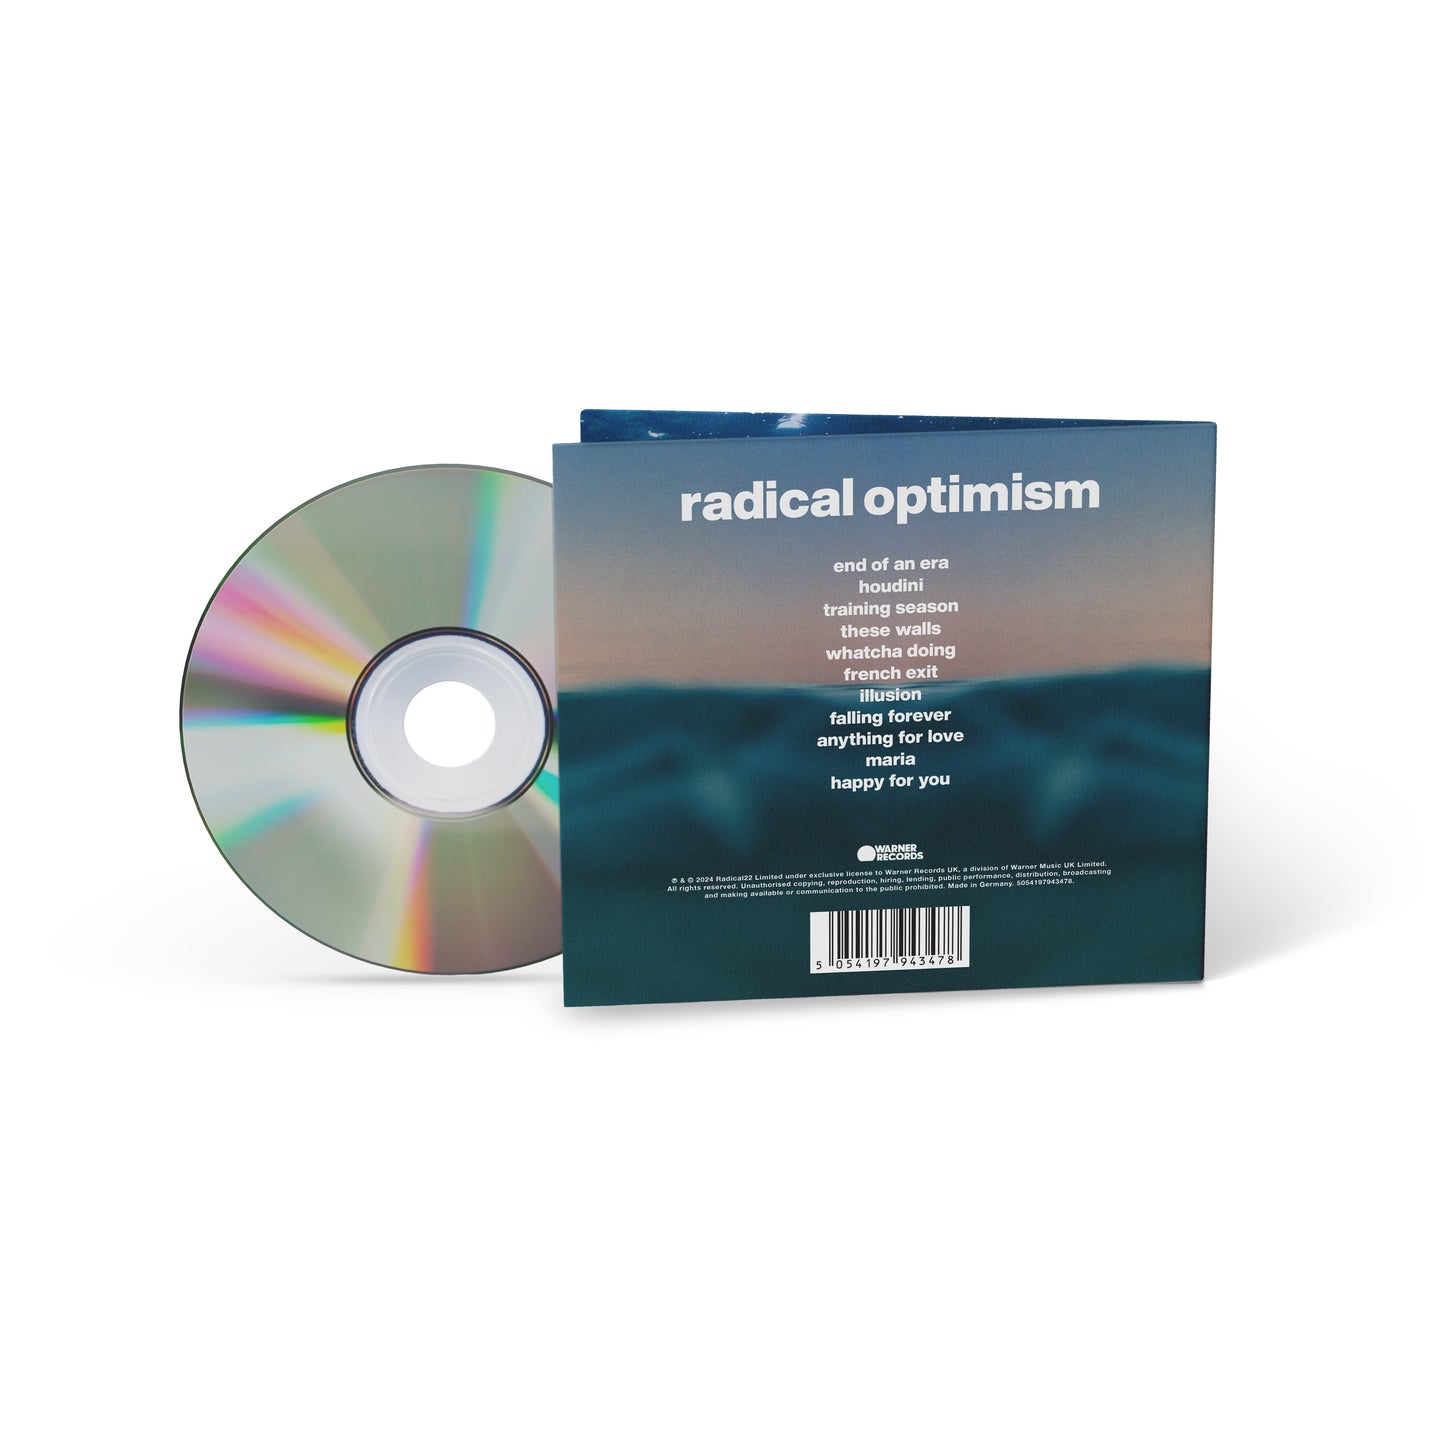 radical optimism lenticular cd (signed art card included)